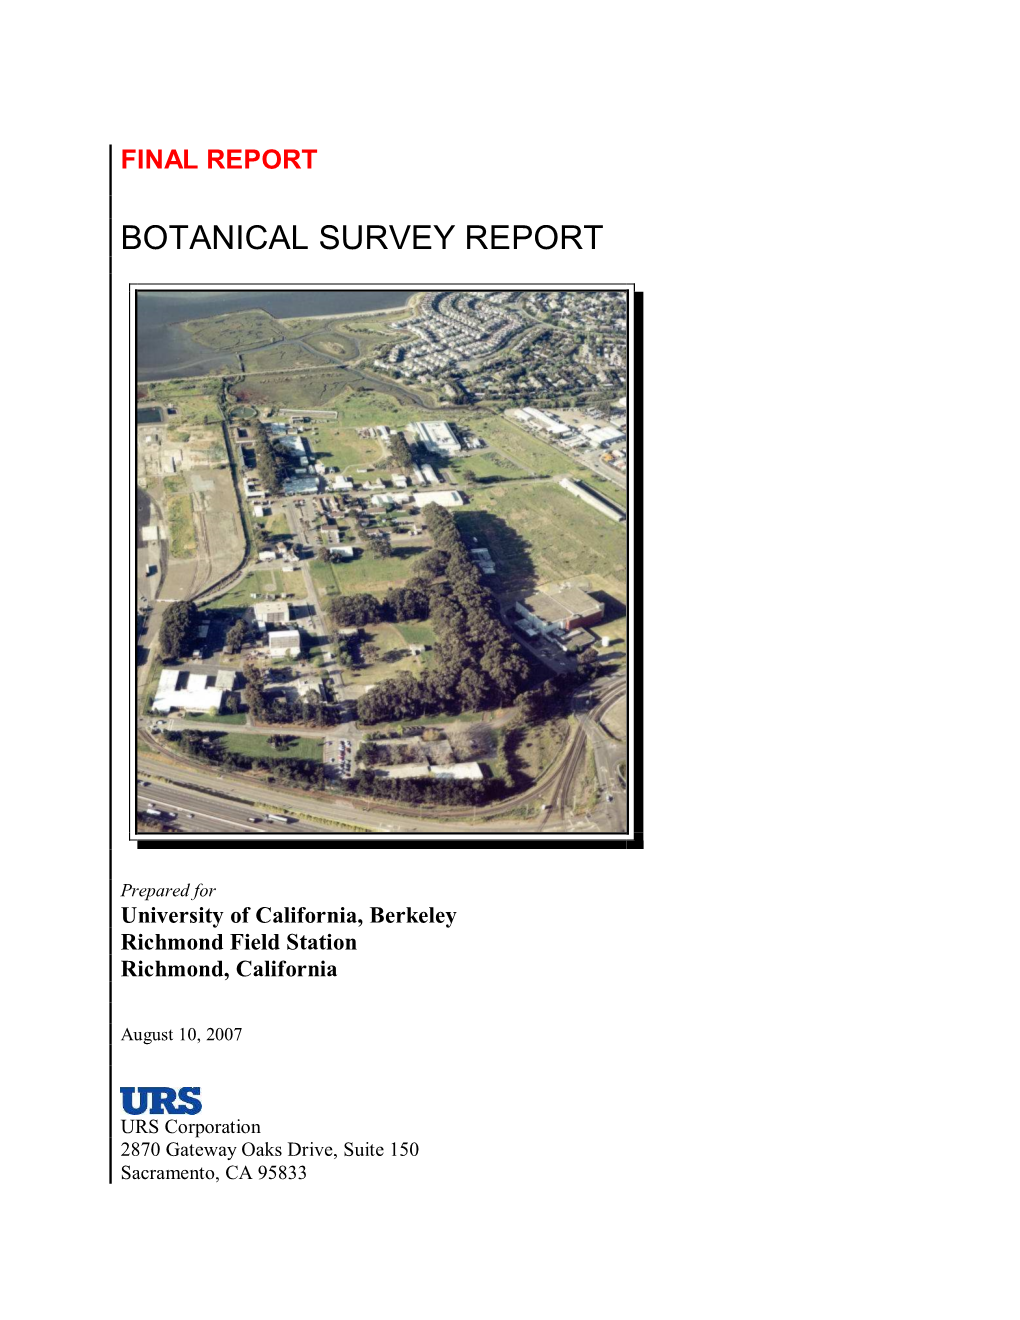 Botanical Survey Report